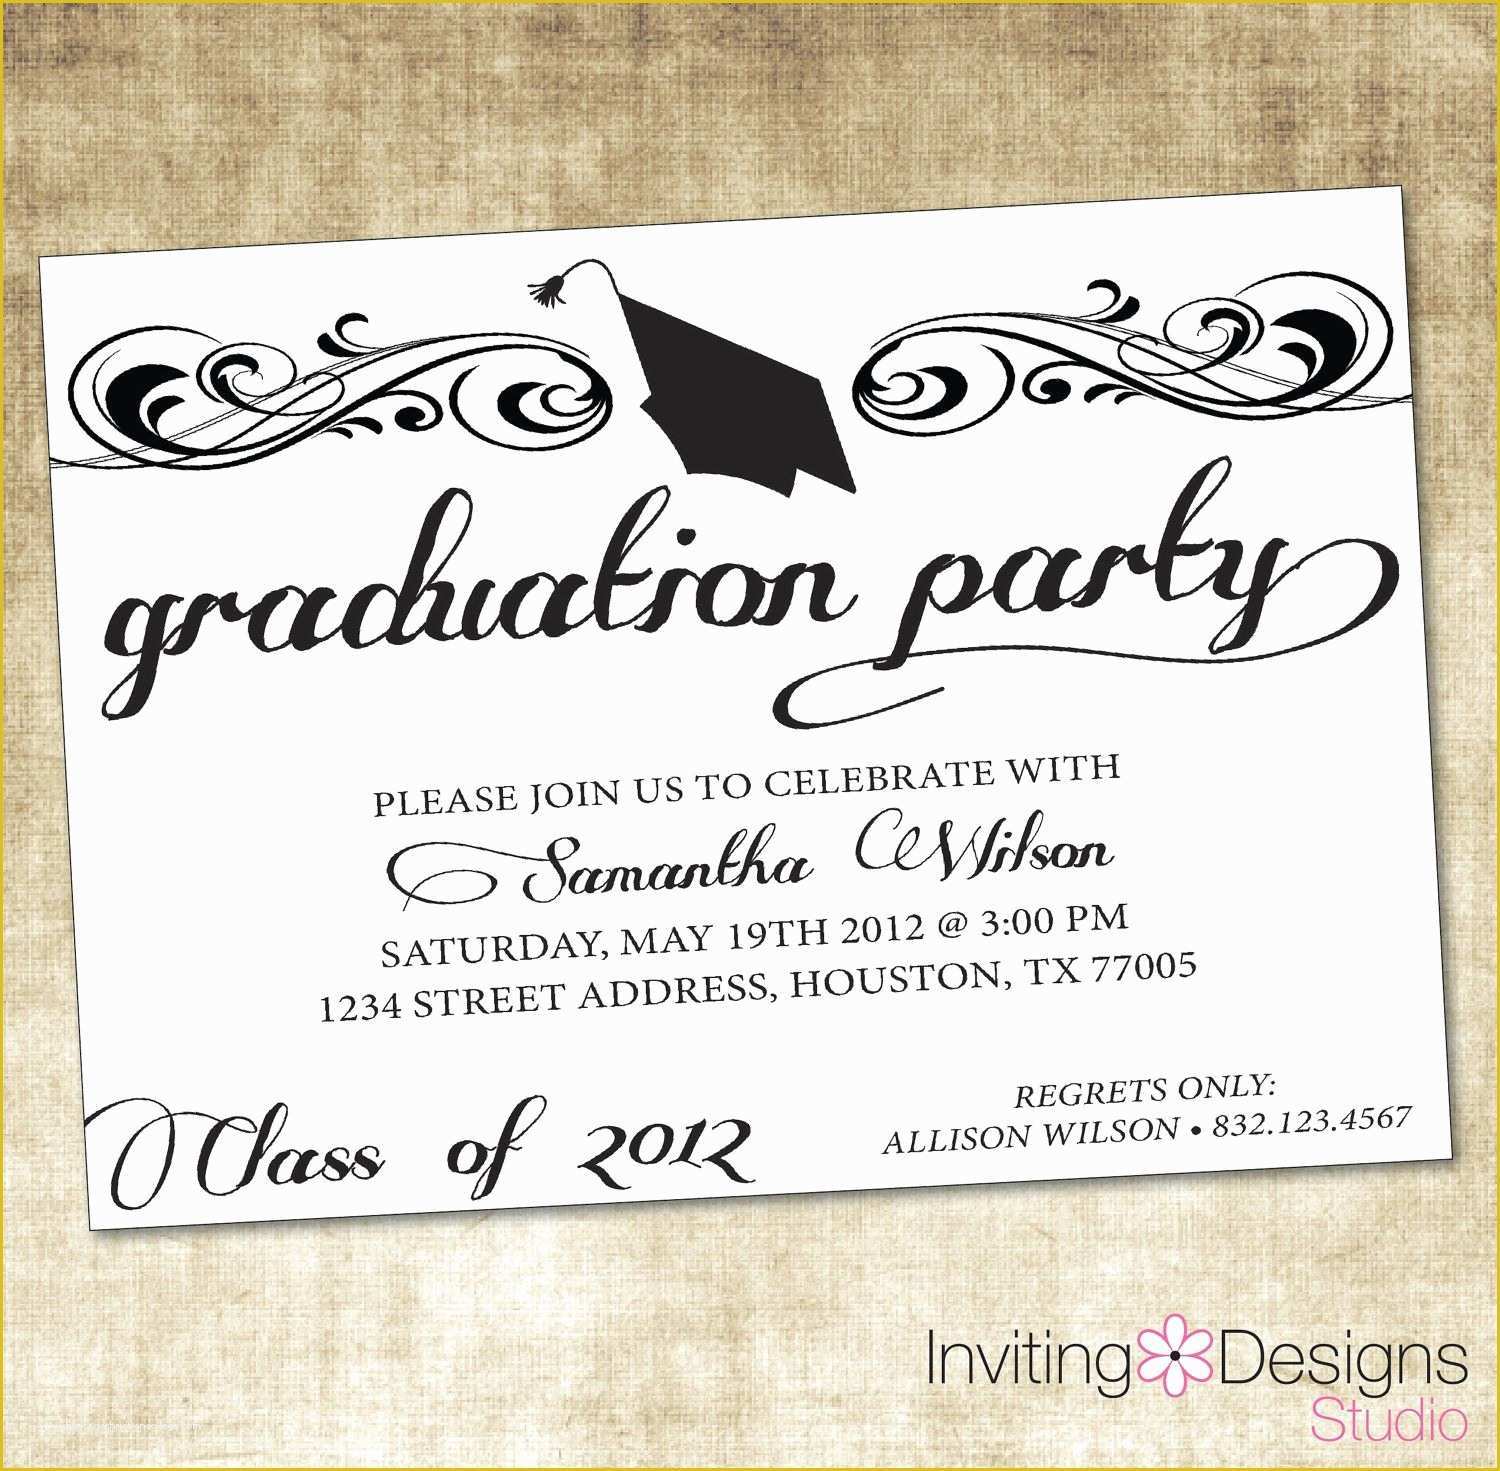 College Graduation Party Invitations Templates Free Of Image Result for Graduation Party Invitation Wording Ideas